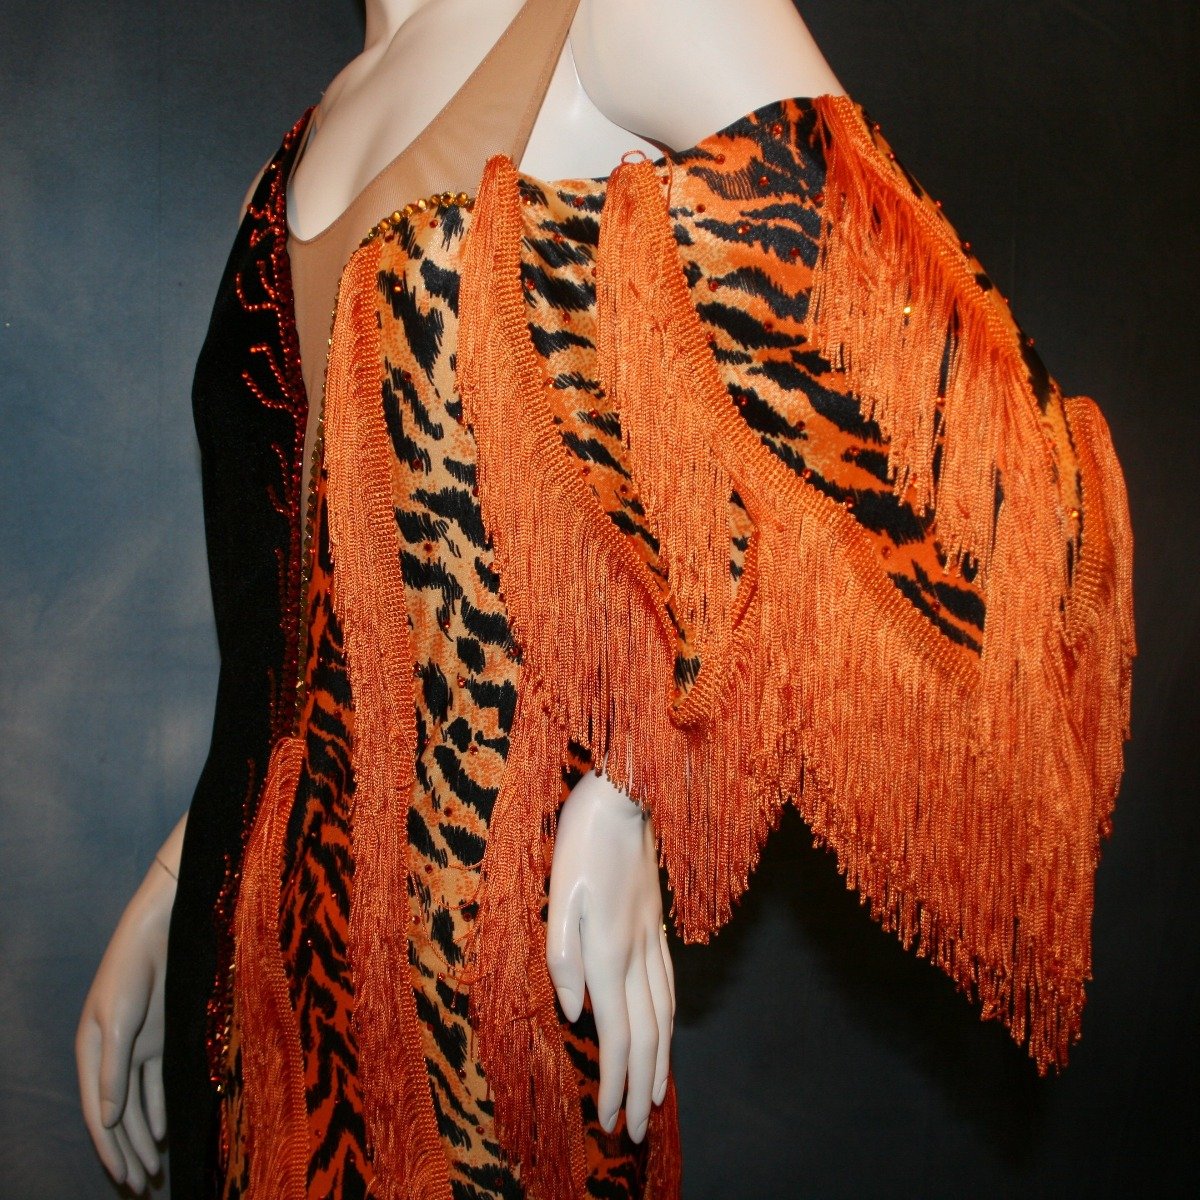 Crystal's Creations top close up view of orange & black tiger print Latin/rhythm dress with fringe